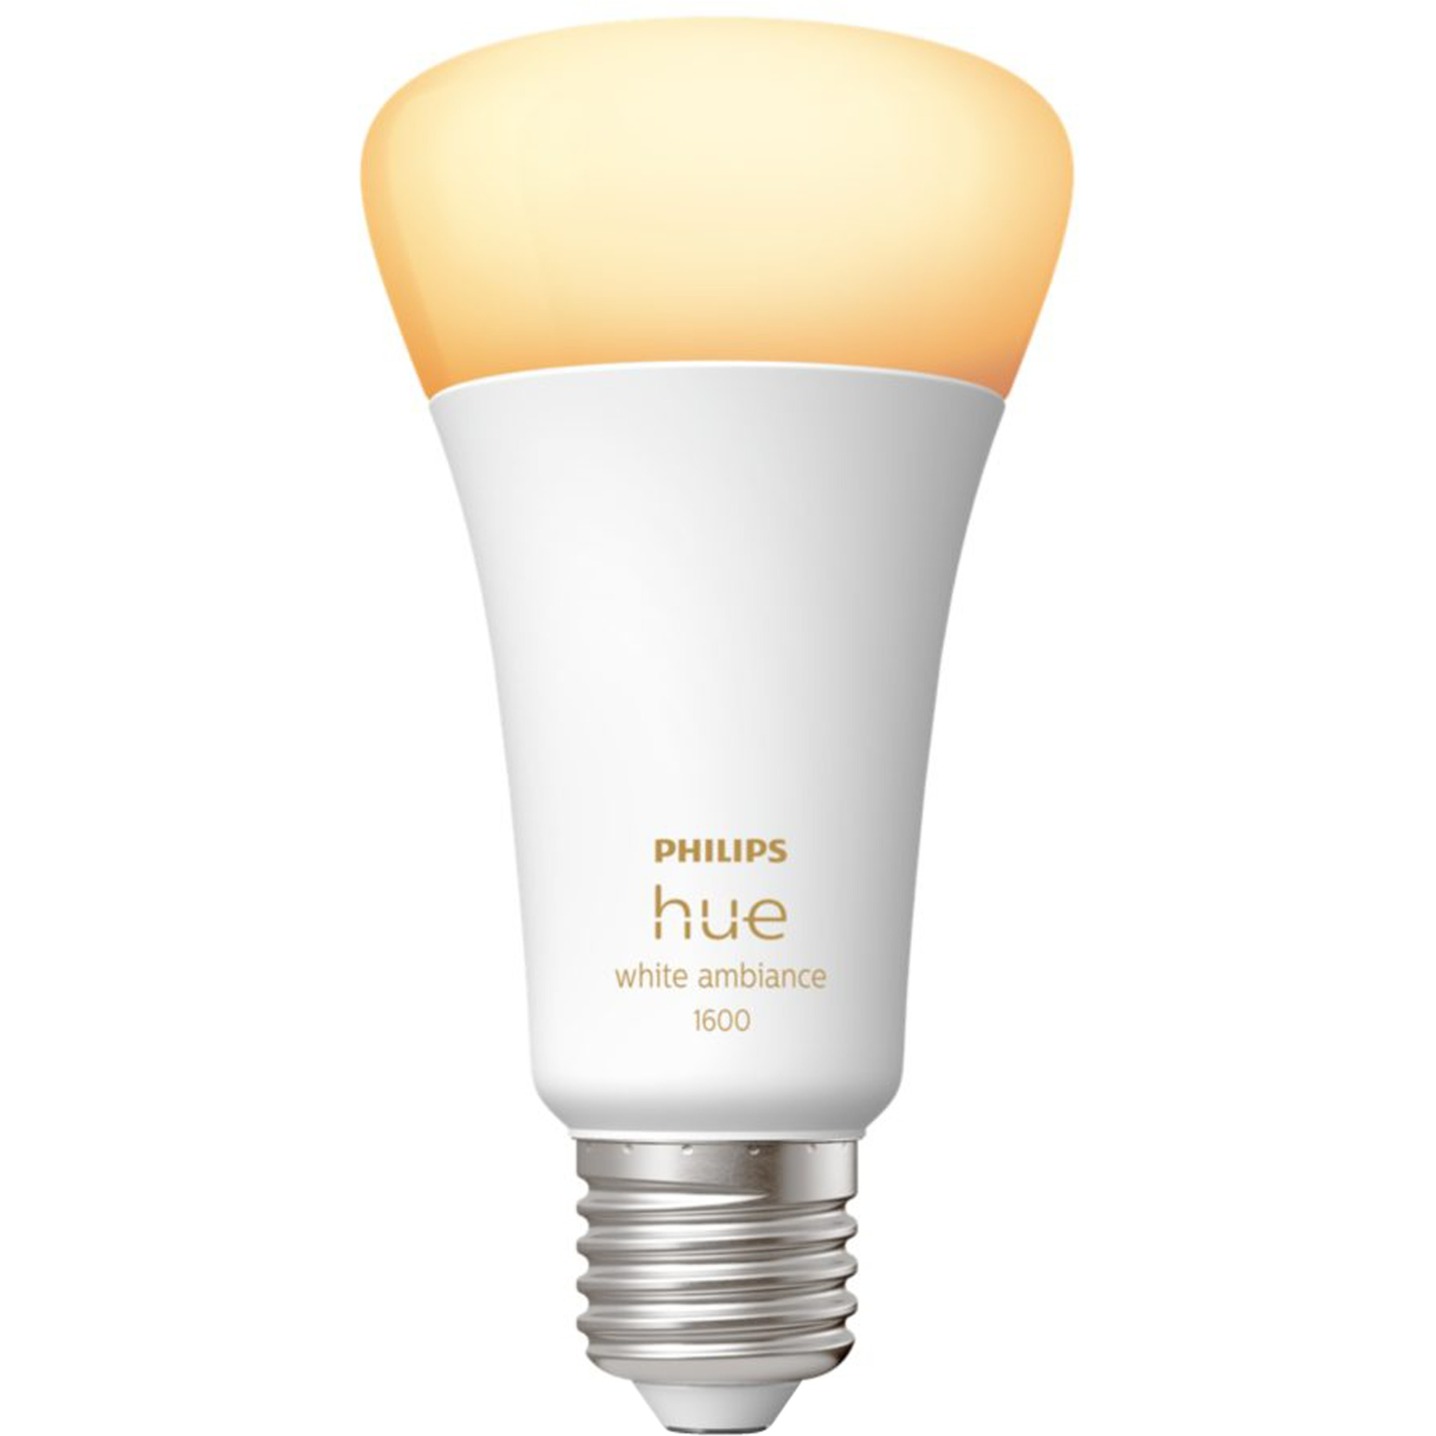 Image of Alternate - Hue White Ambiance A67 E27, LED-Lampe online einkaufen bei Alternate